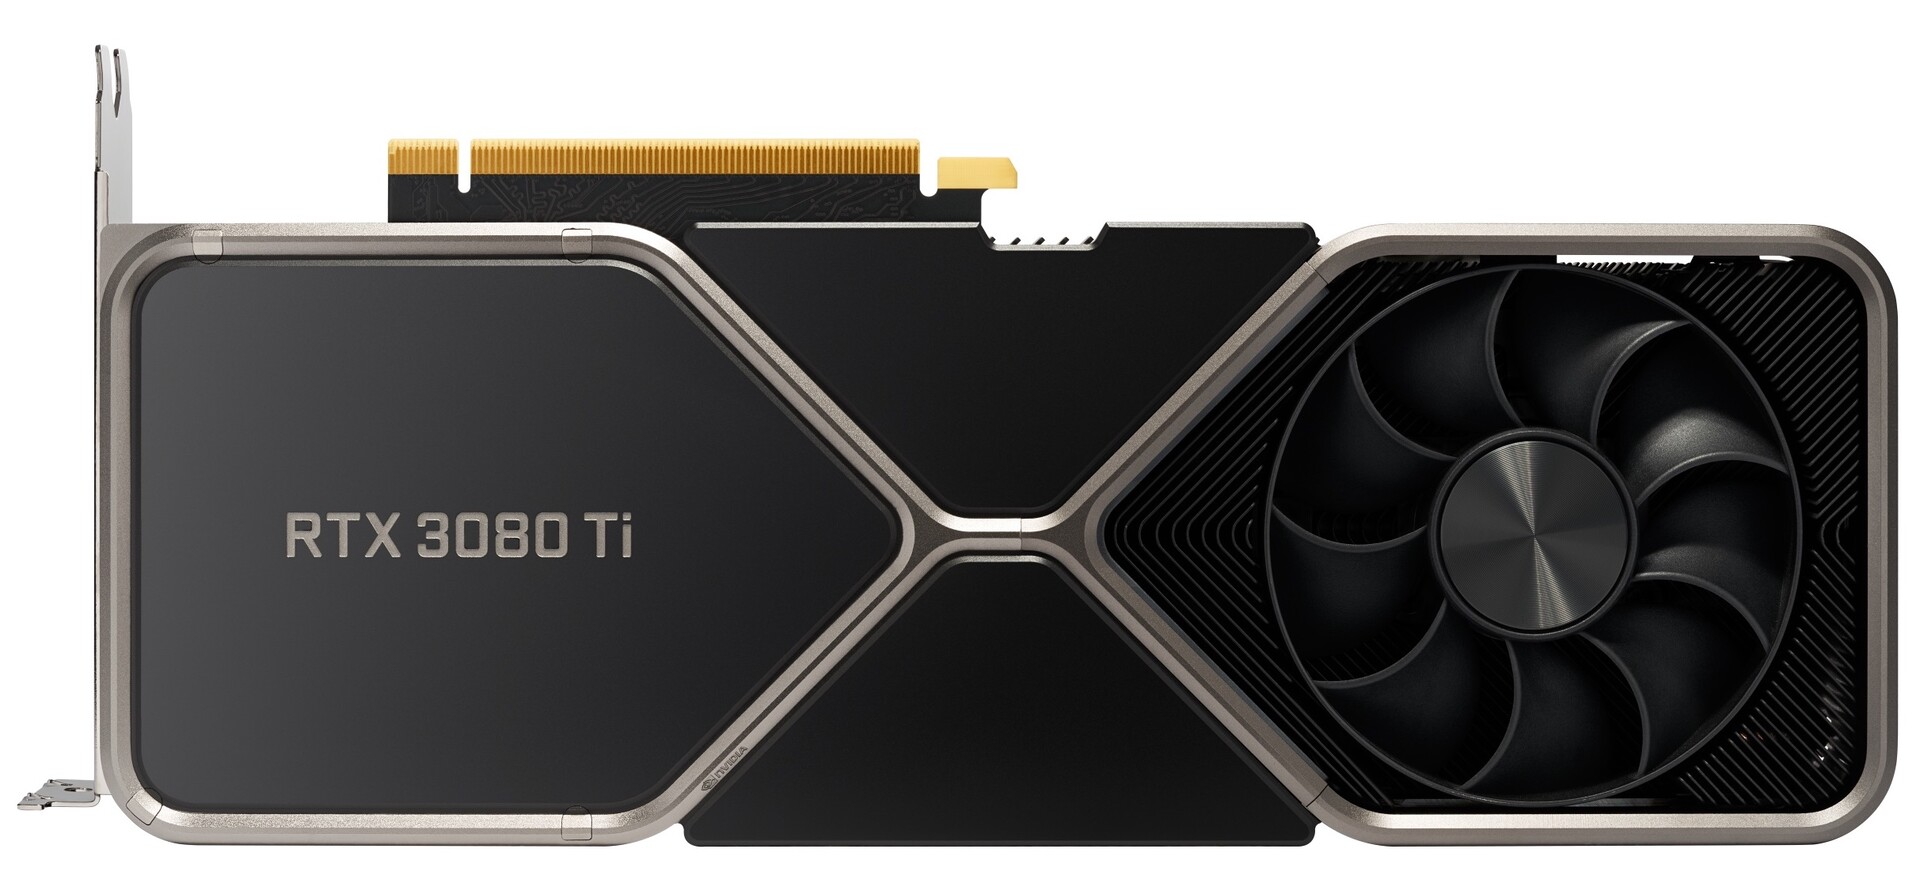 NVIDIA GeForce RTX 3080 Ti GPU - Benchmarks and Specs - NotebookCheck ...